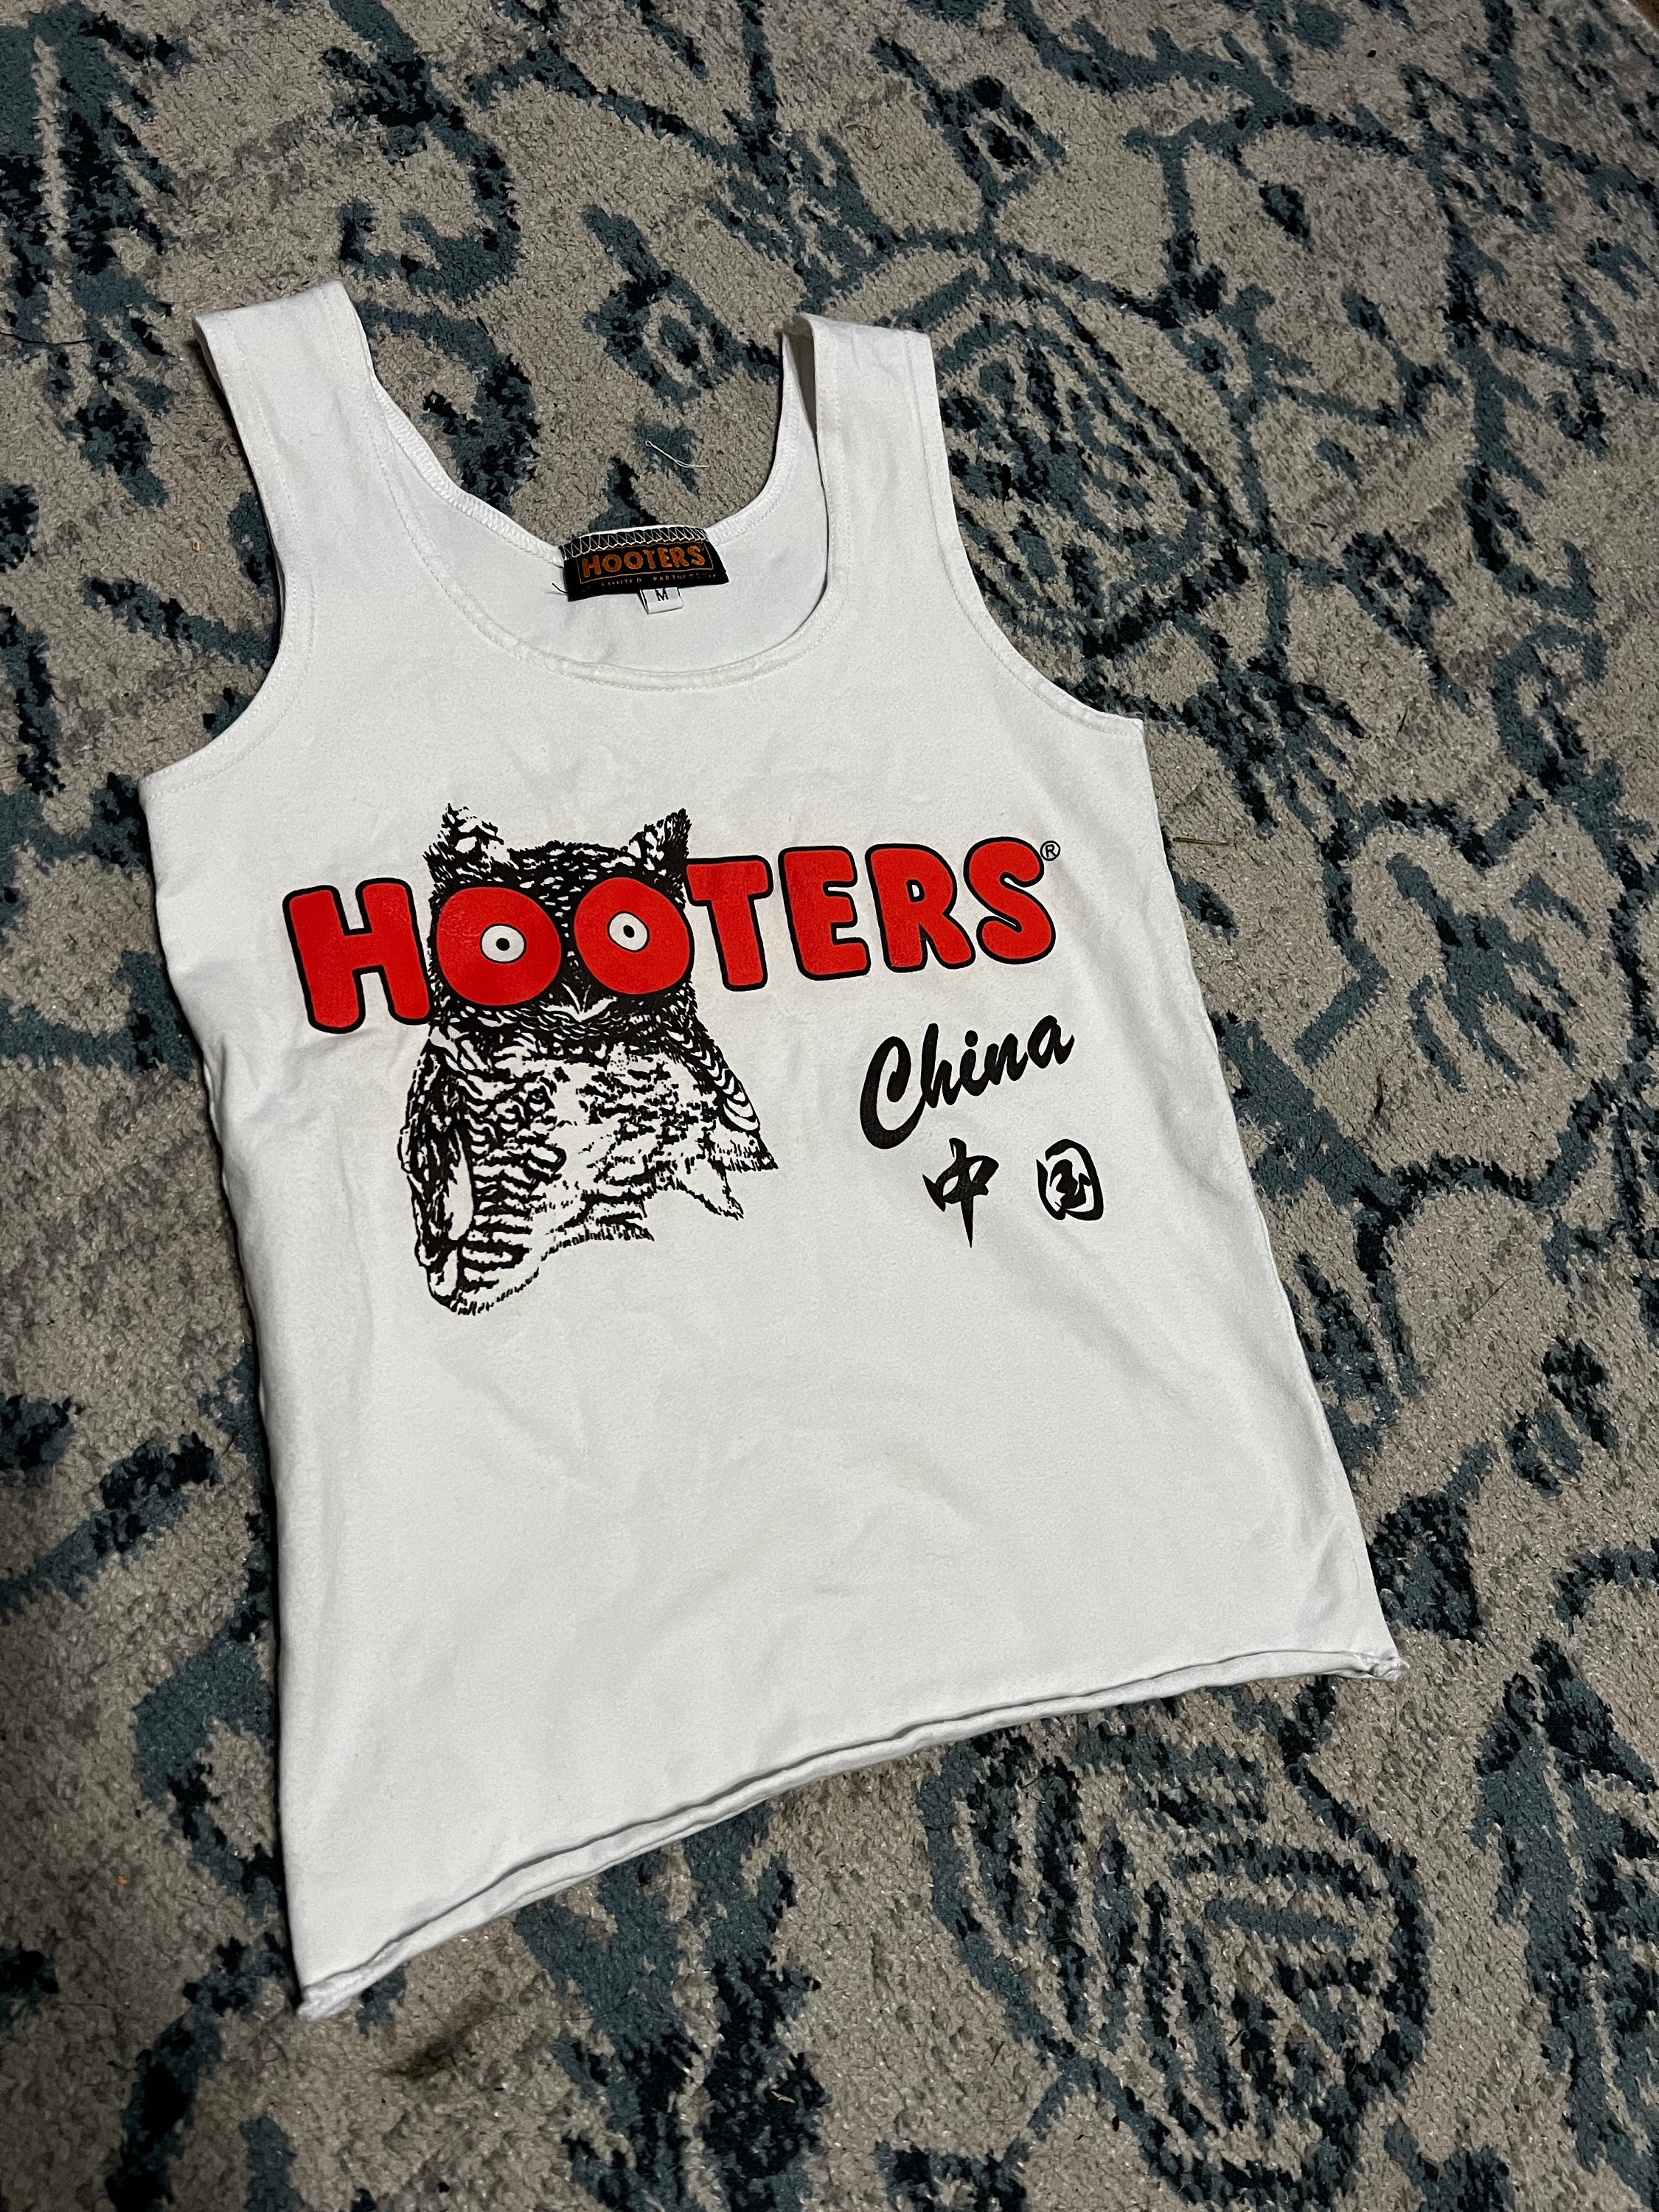 Hooters Uniform Outfit Black Size XXS - $50 (33% Off Retail